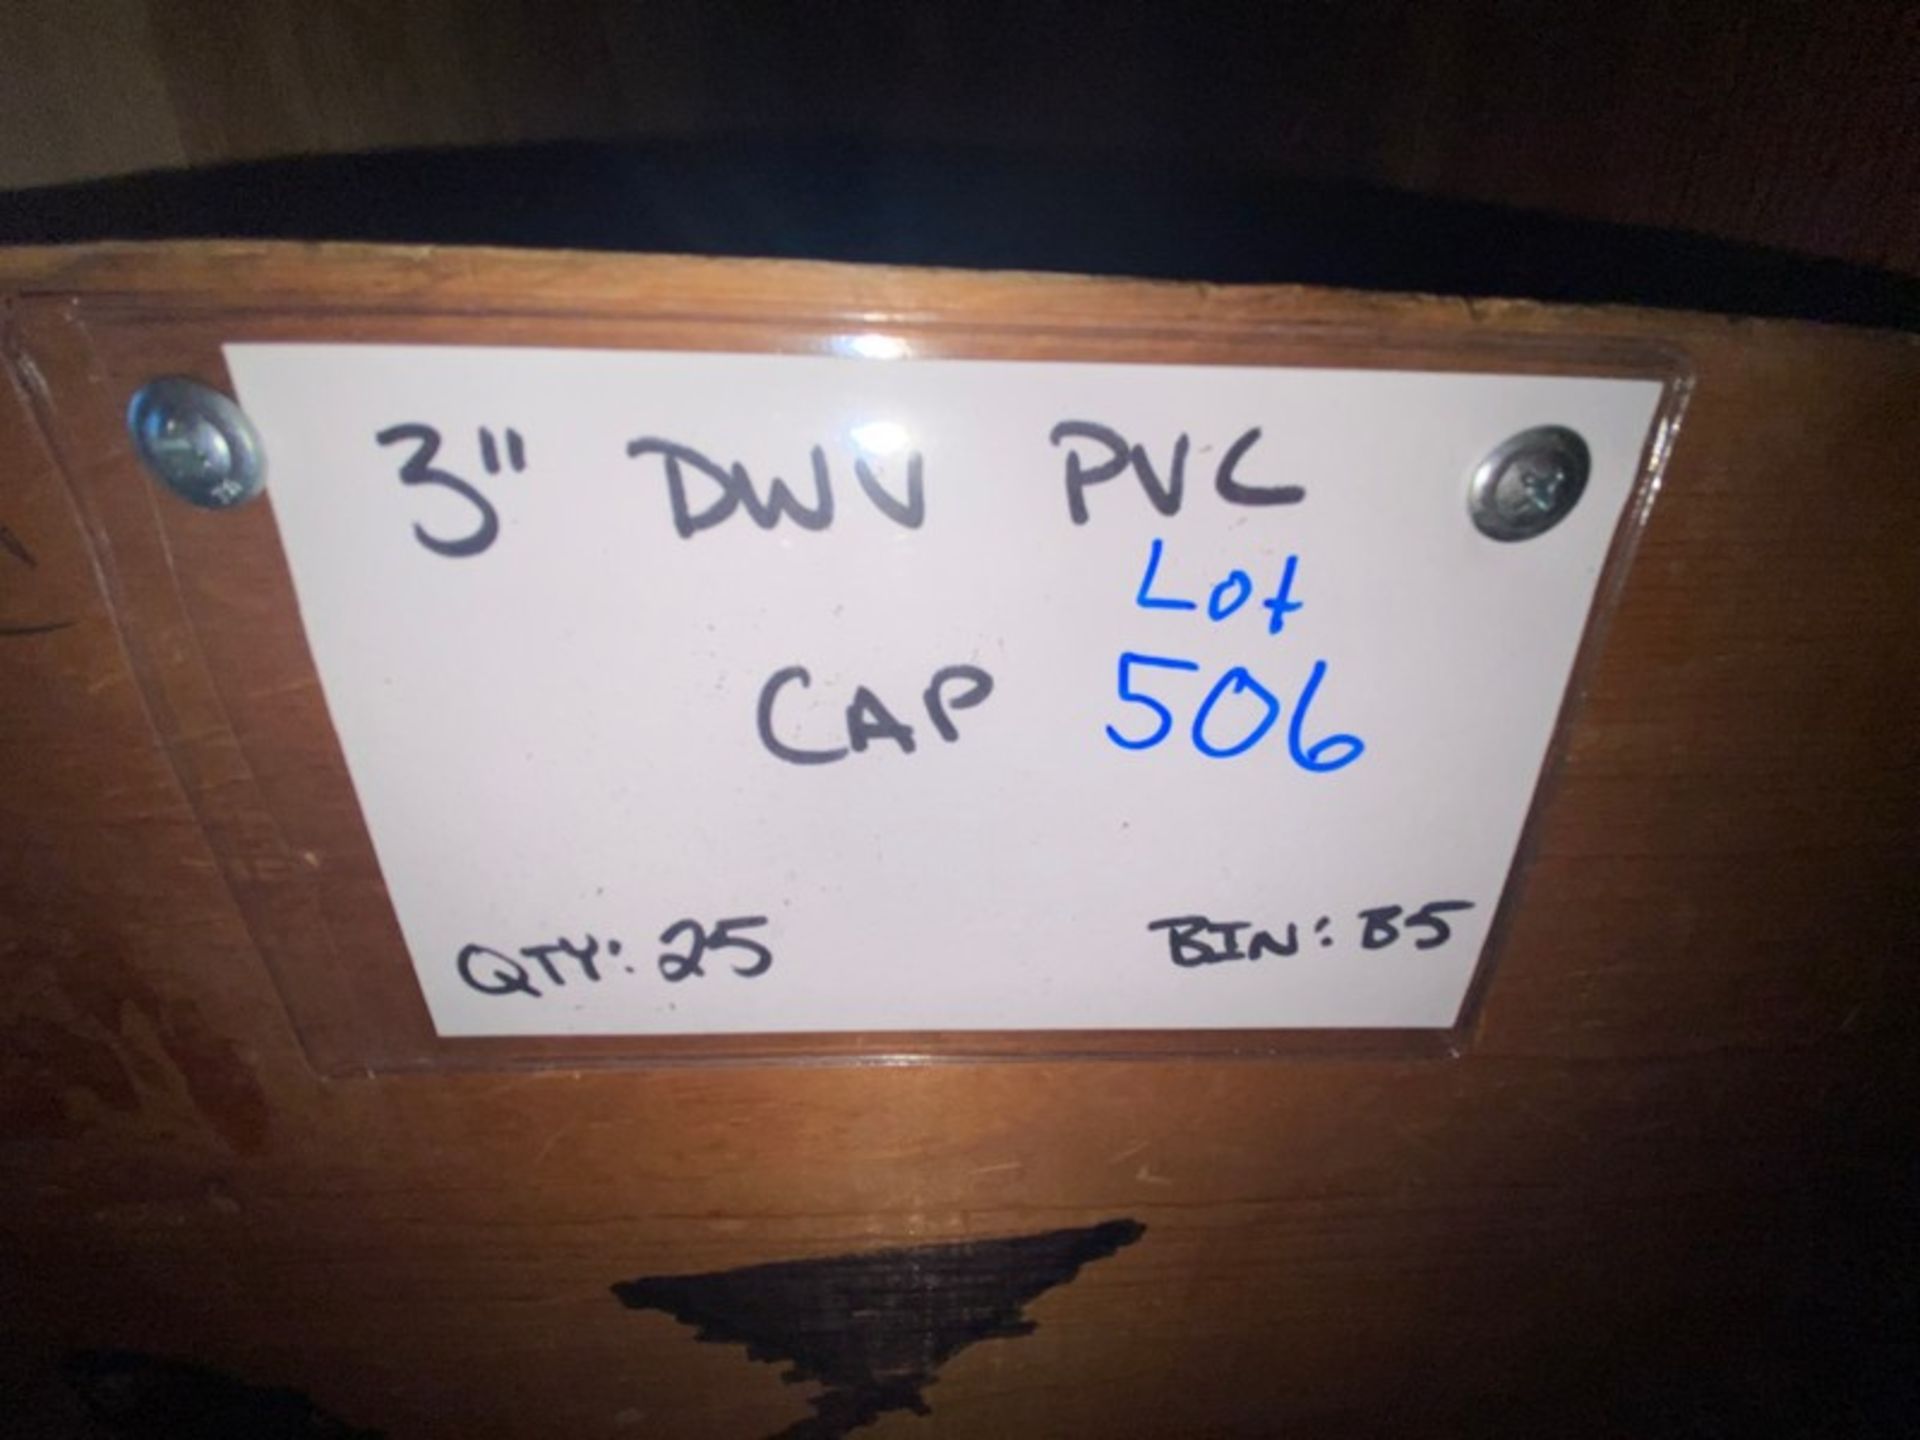 3” DWV PVC CAP (Bin:B5) (Trailer #5)(LOCATED IN MONROEVILLE, PA) - Image 4 of 4